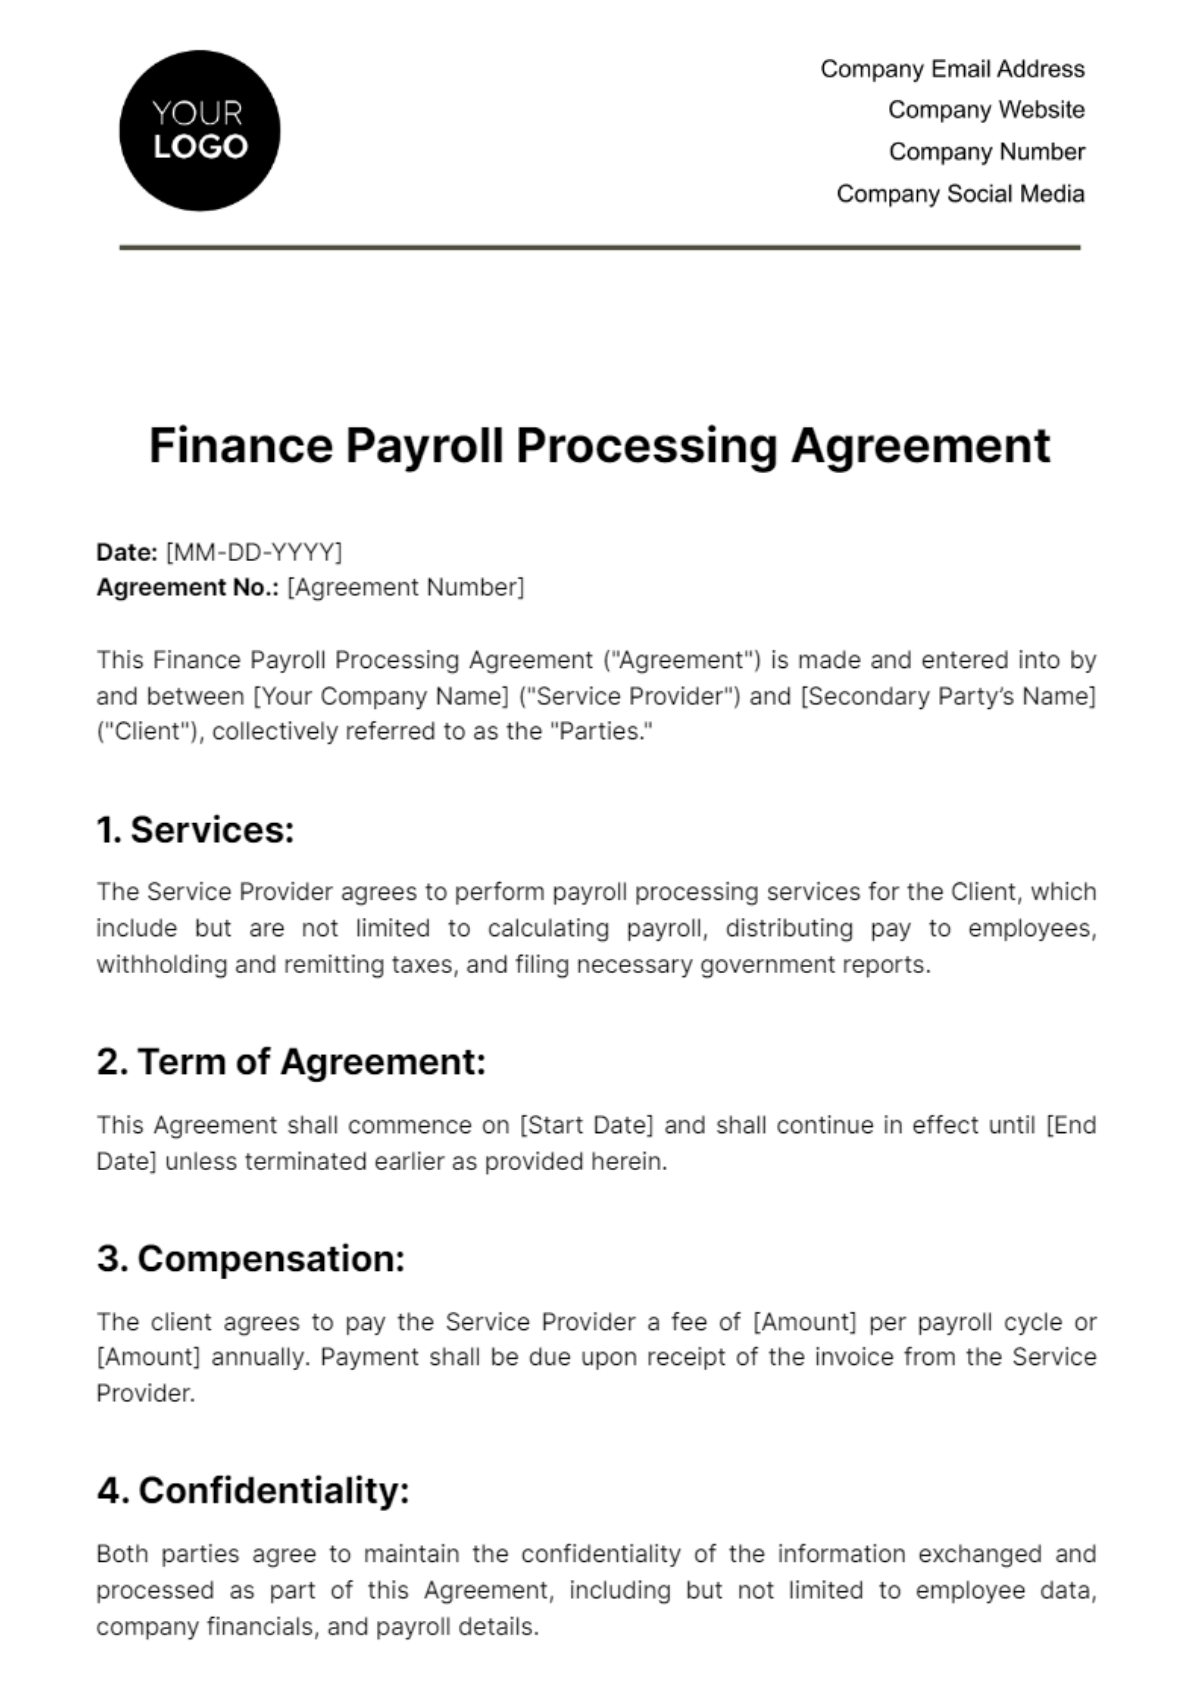 Finance Payroll Processing Agreement Template